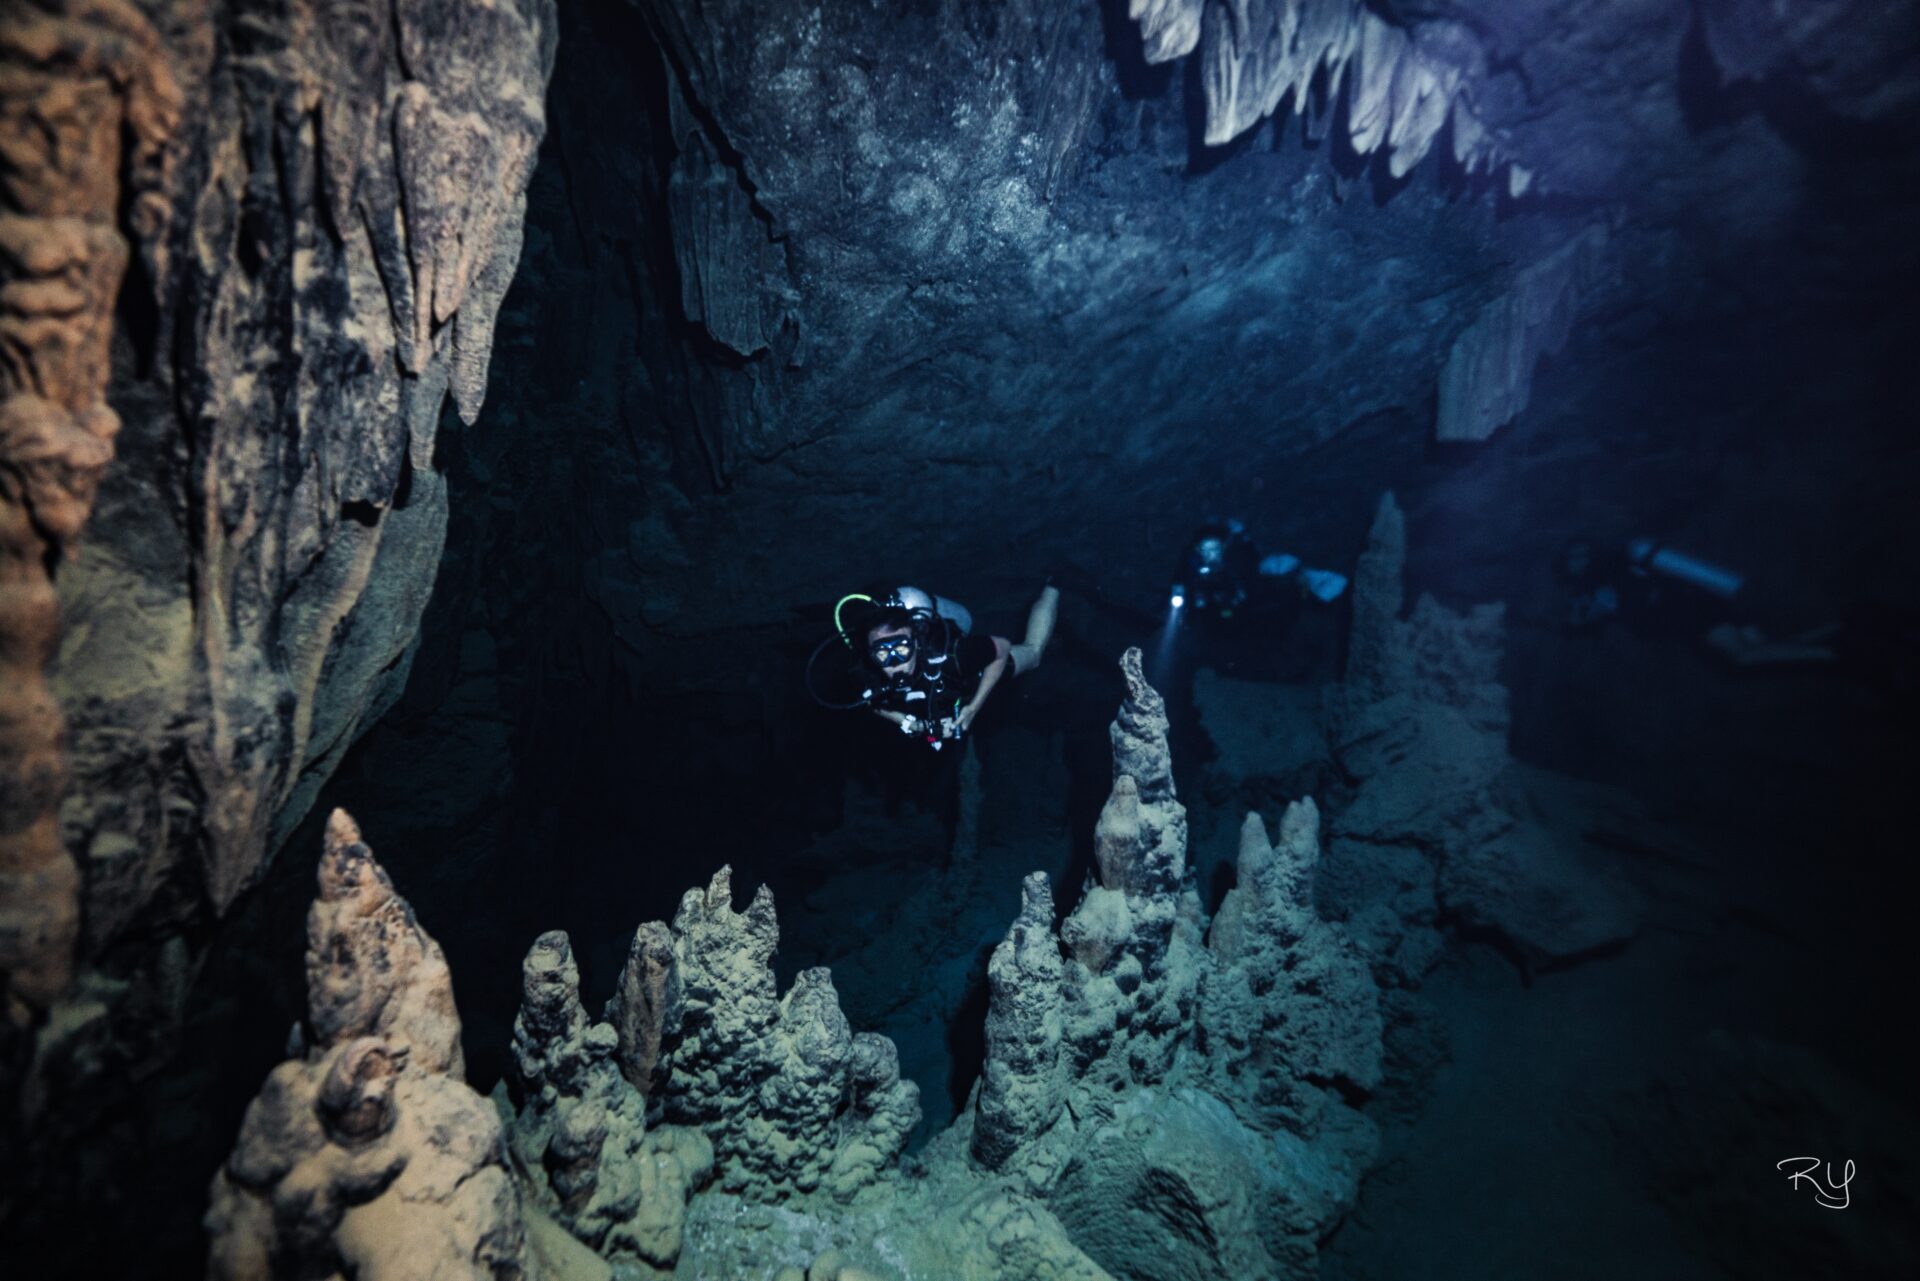 Cavern diving on Cape Hedo, Okinawa